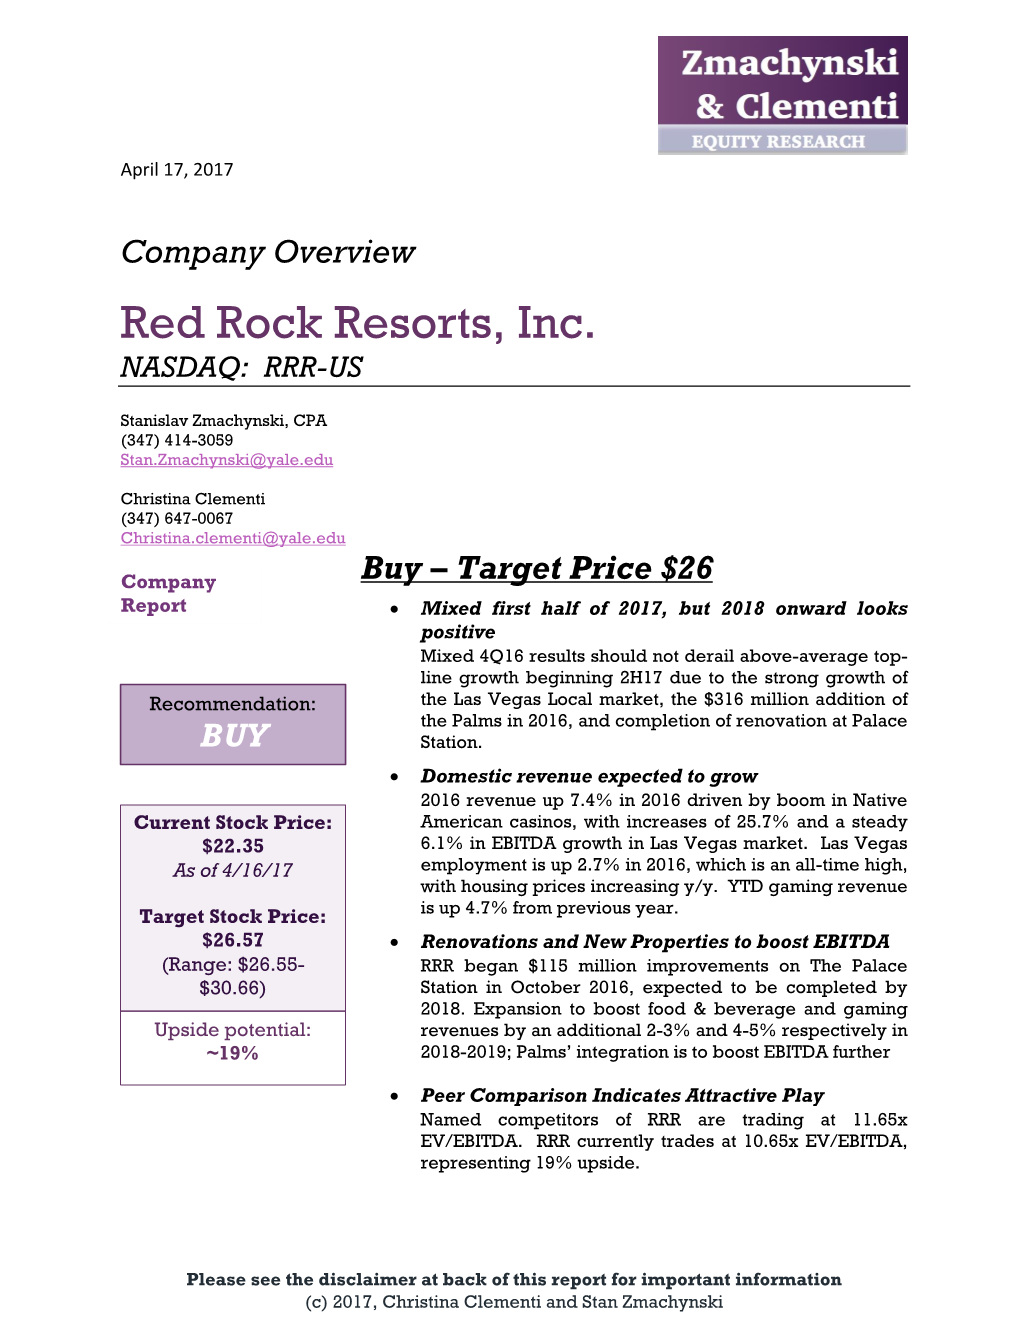 Red Rock Resorts, Inc. NASDAQ: RRR-US